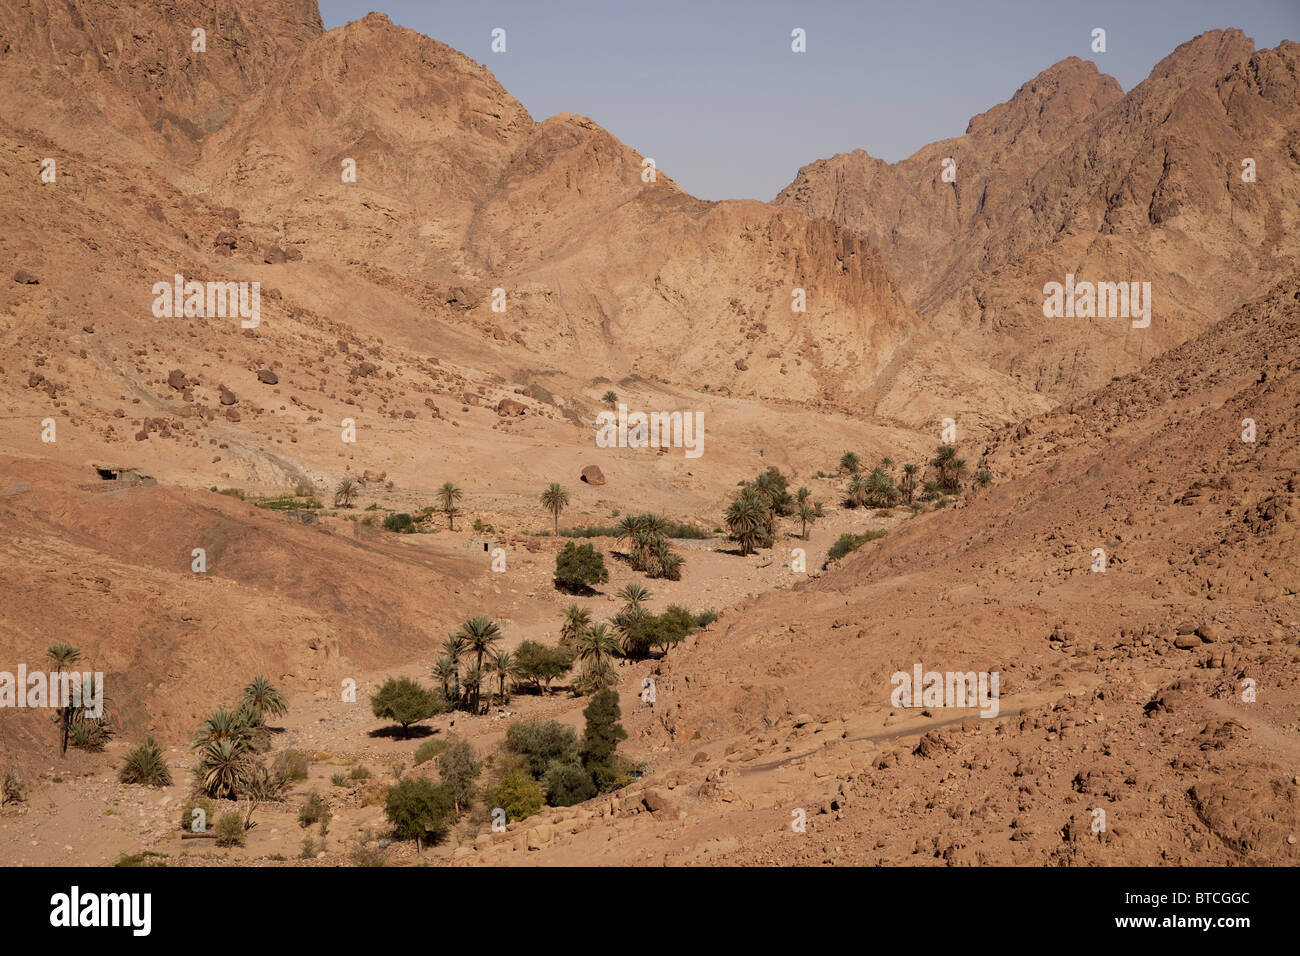 the fertile Wadi Tilah valley near Saint Katherine or El Miga village, Sinai, Egypt, Africa, Stock Photo